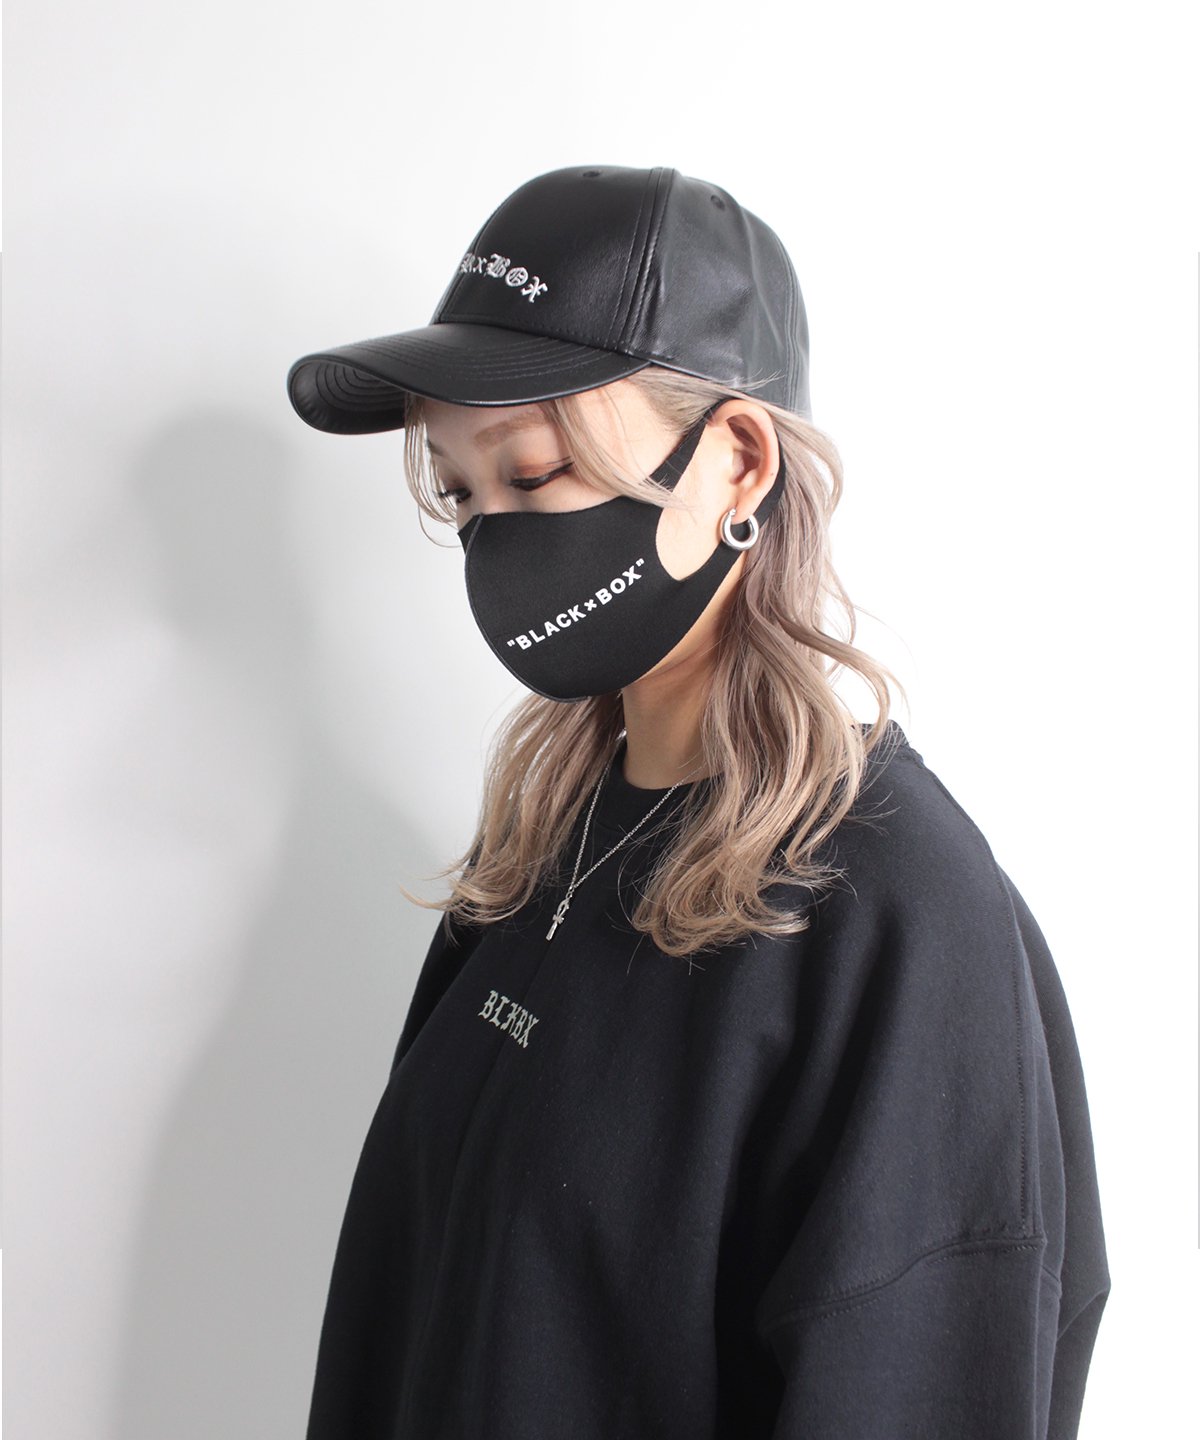 2月17日発売先行予約】 BLACK×BOX Leather LOGO Embroidery CAP